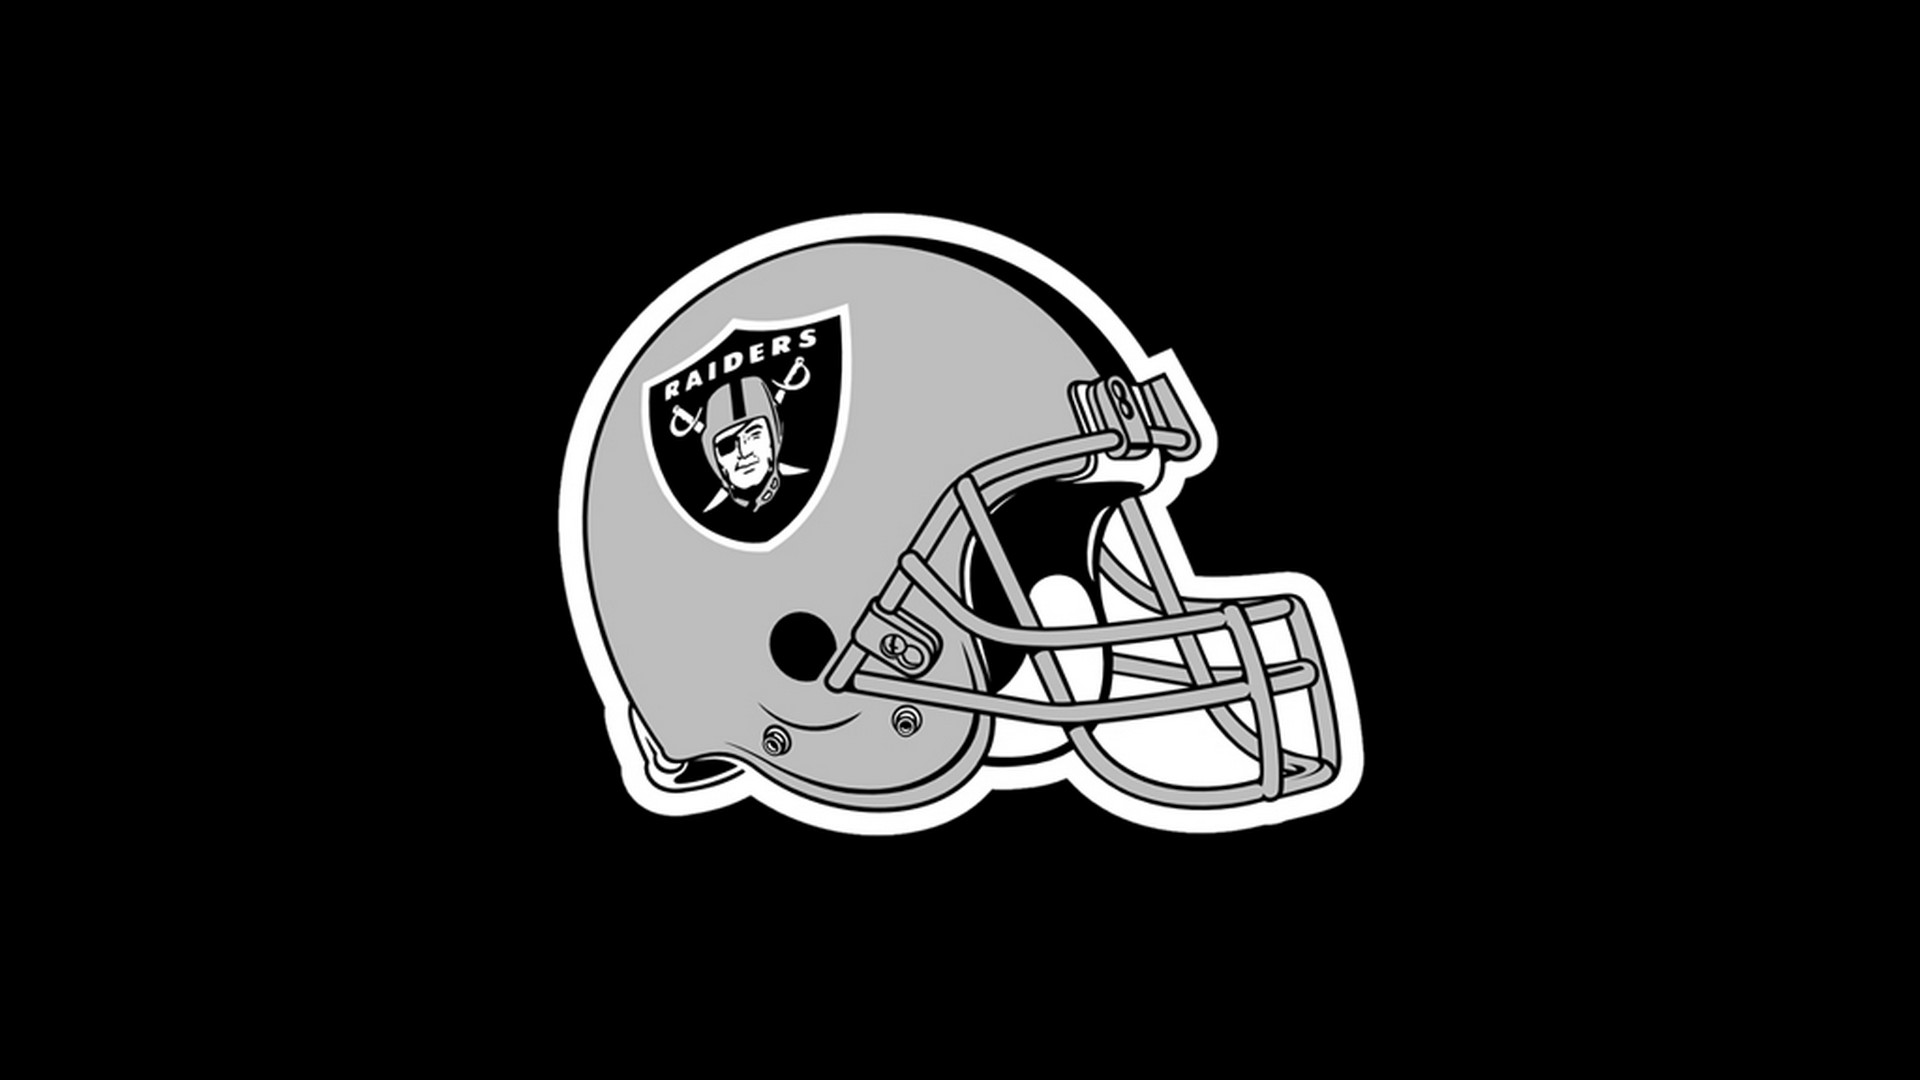 Oakland Raiders NFL HD Wallpaper NFL Football Wallpaper